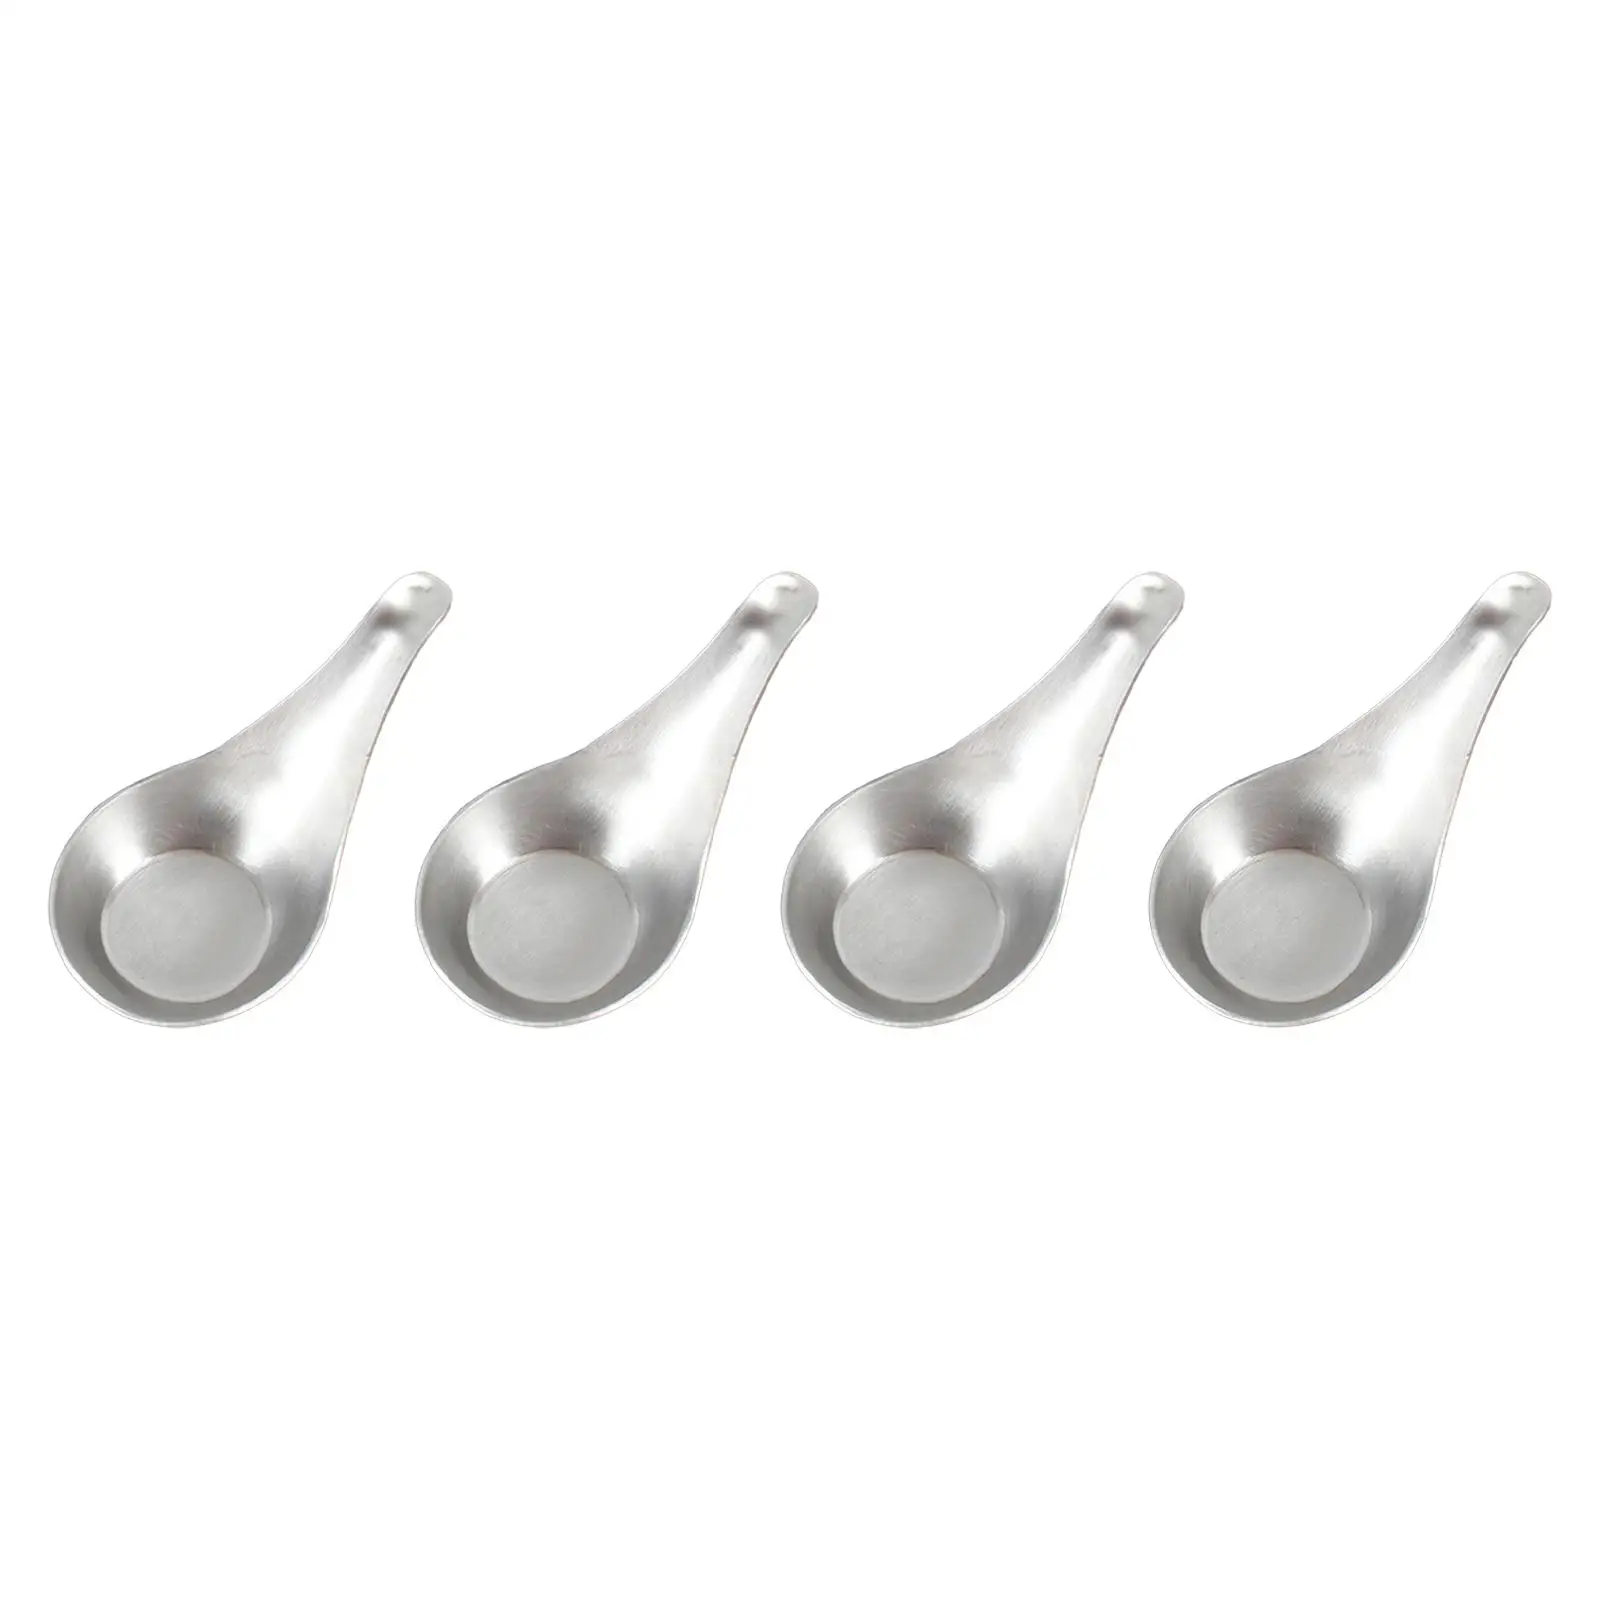 4 Pieces Sugar Spoons Stainless Steel Dessert Spoon Mini Spoon Short Handle Teaspoon for Ice Cream Coffee Salt Baking Dessert